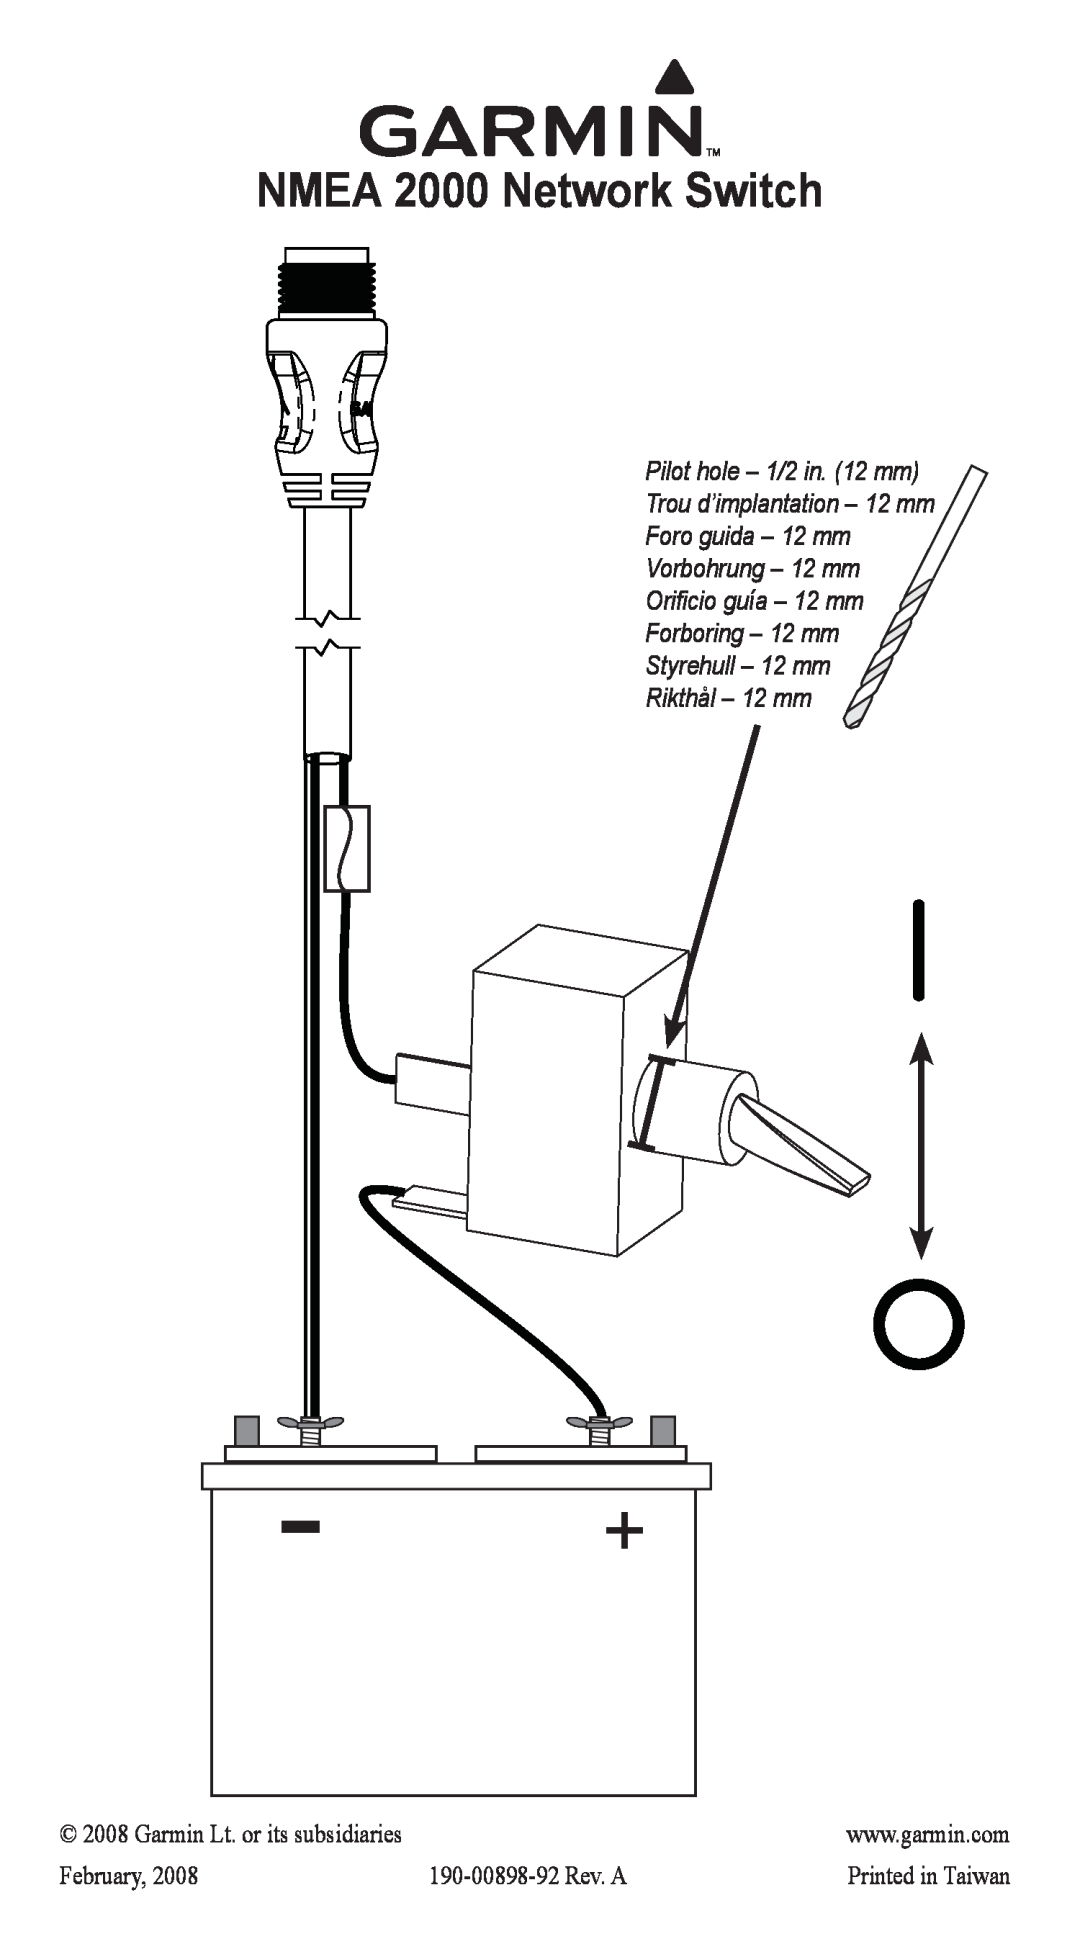 Garmin manual NMEA 2000 Network Switch, Pilot hole - 1/2 in. 12 mm, Trou d’implantation - 12 mm Foro guida - 12 mm 